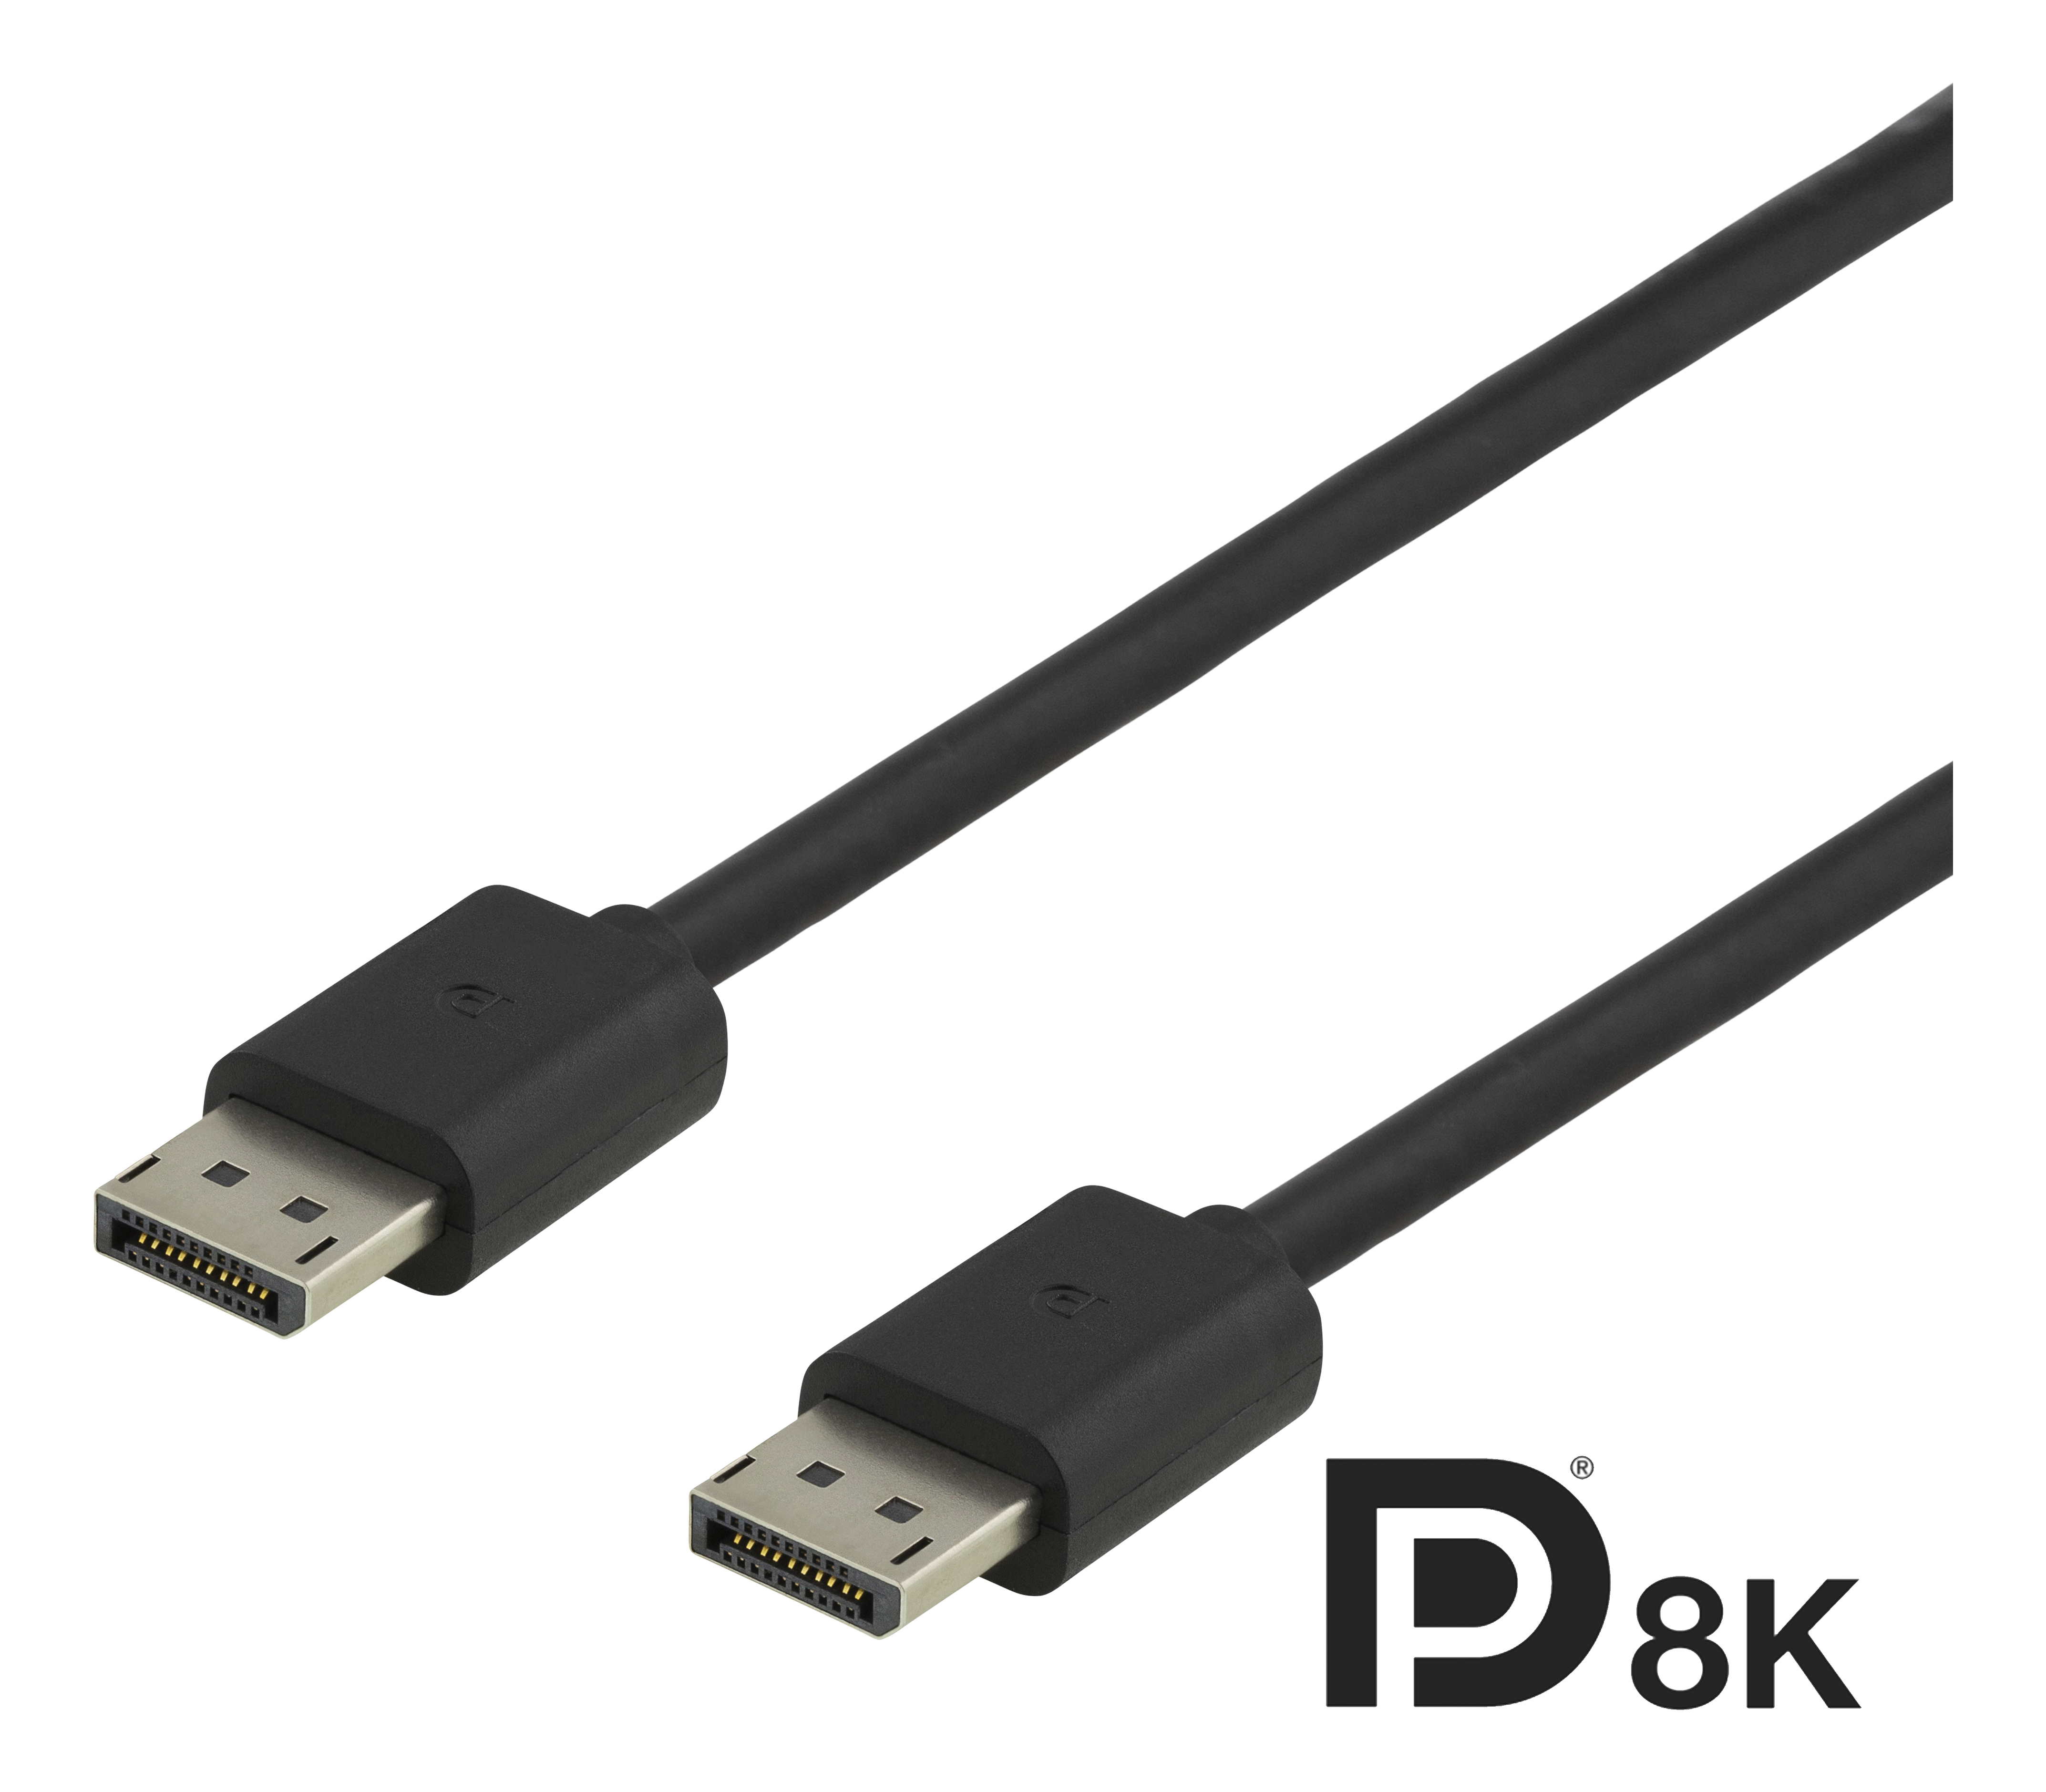 DELTACO 1.4 Schwarz DP kabel, DisplayPort